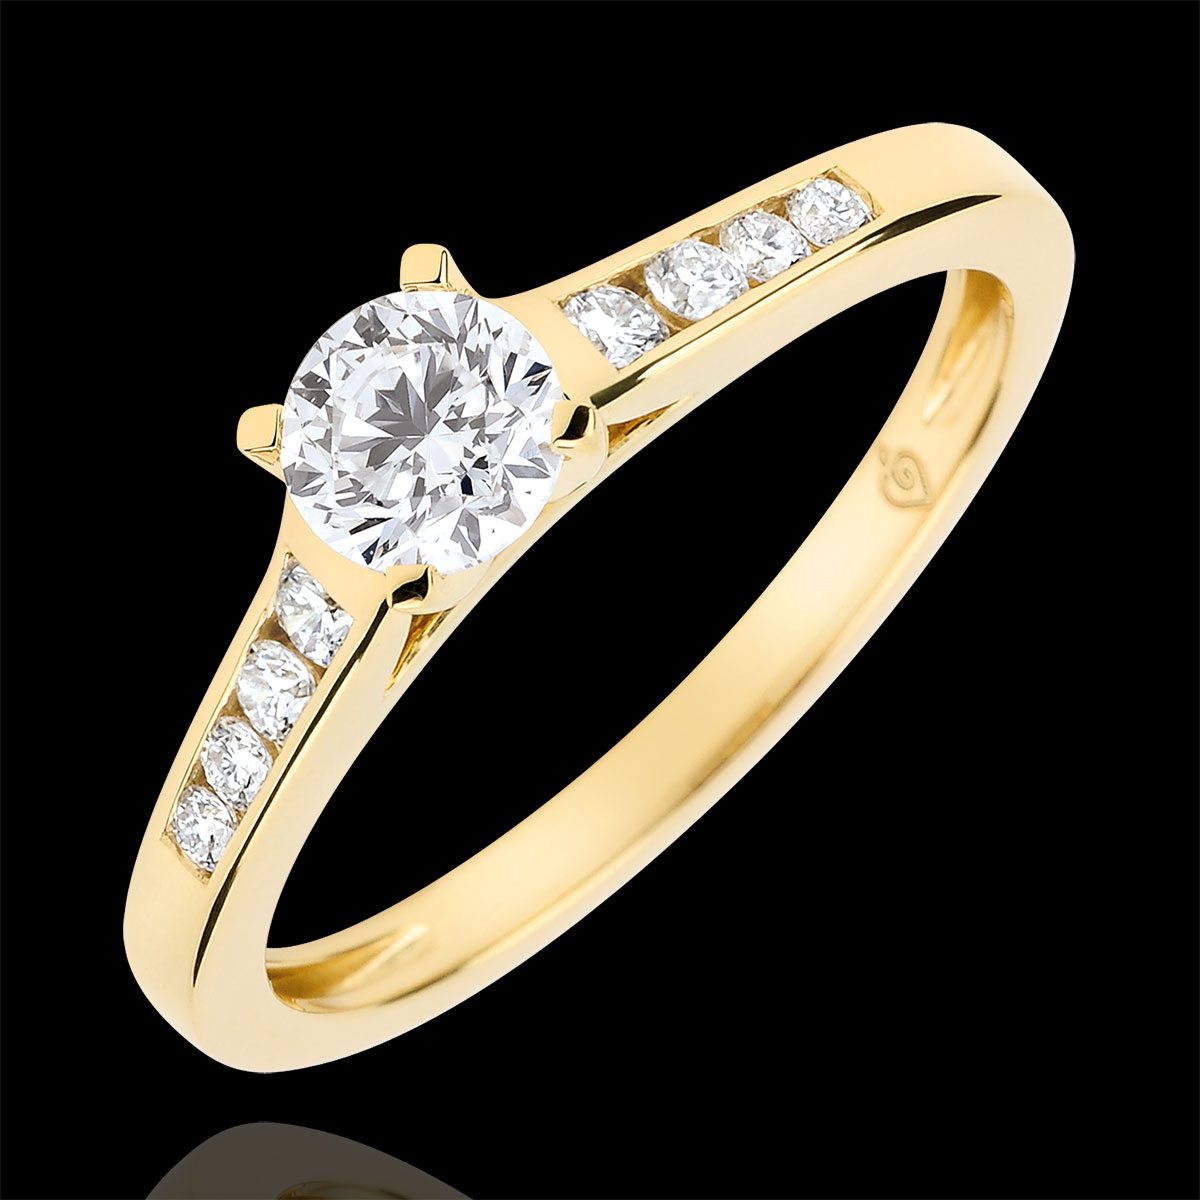 Anillo de compromiso - diamante 0.4 quilates oro amarillo 18 quilates : Edenly